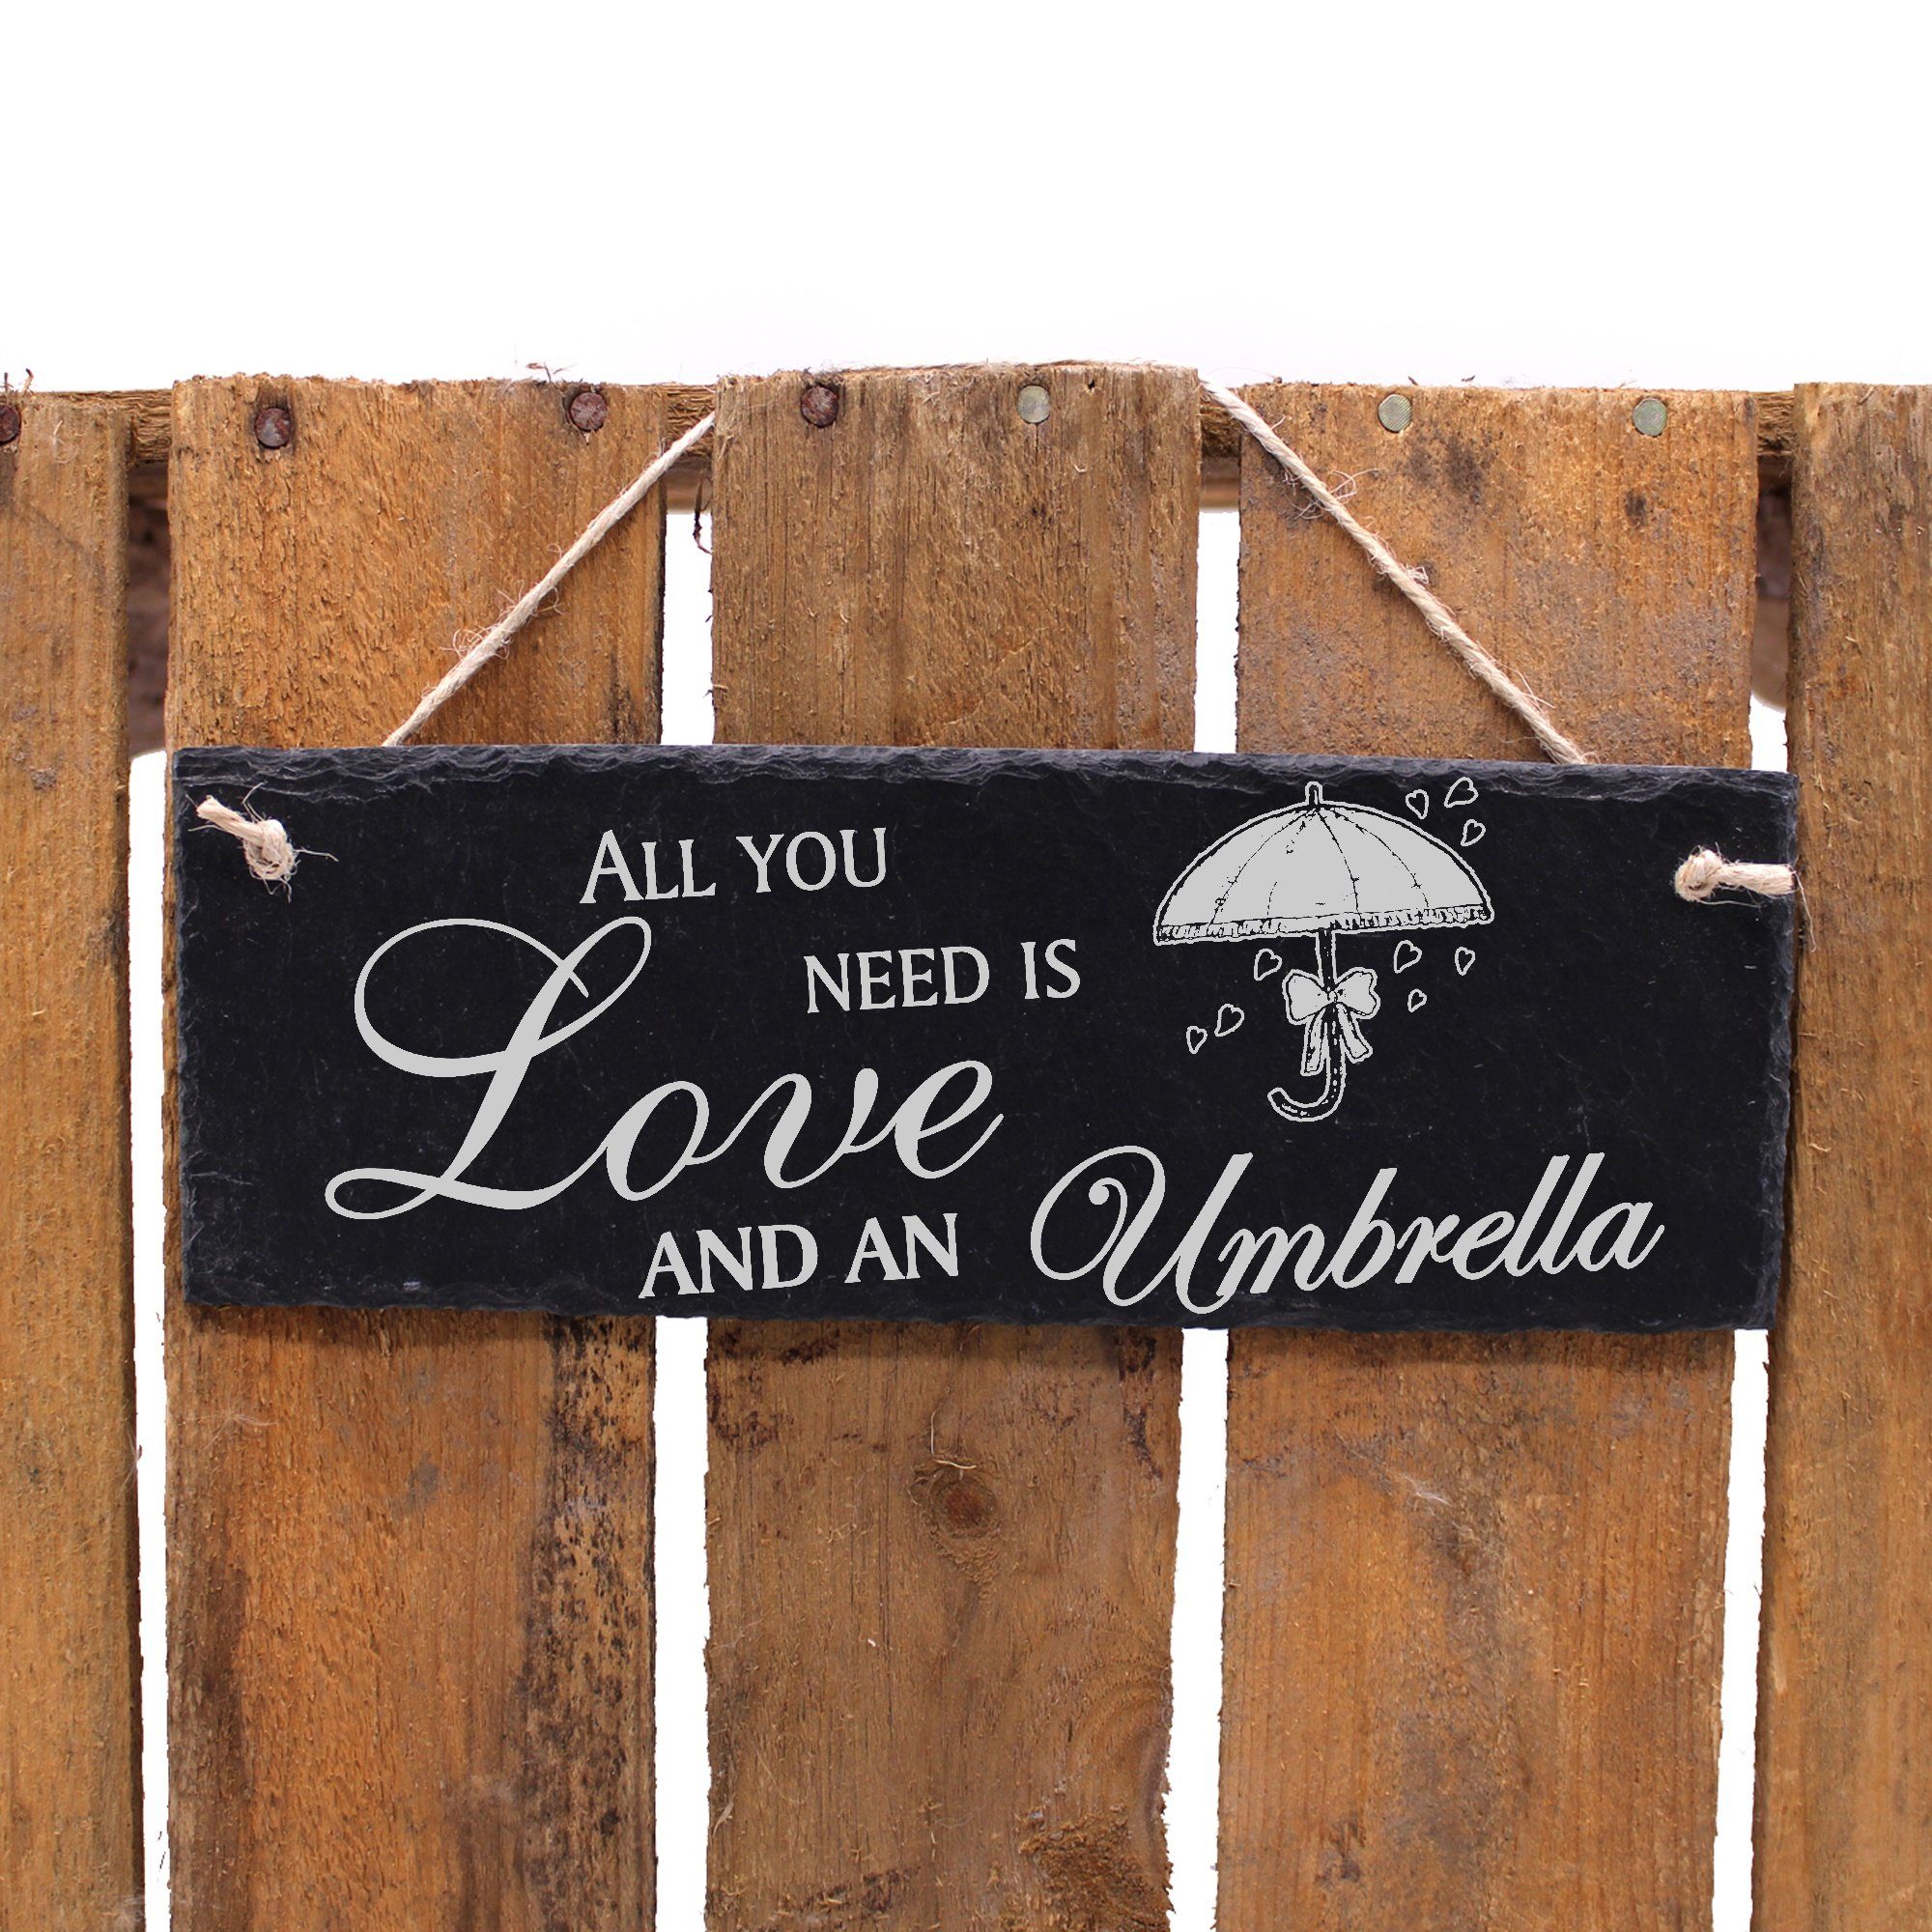 Umbrella All is mit Hängedekoration Dekolando 22x8cm need you Herzen Regenschirm an and Love